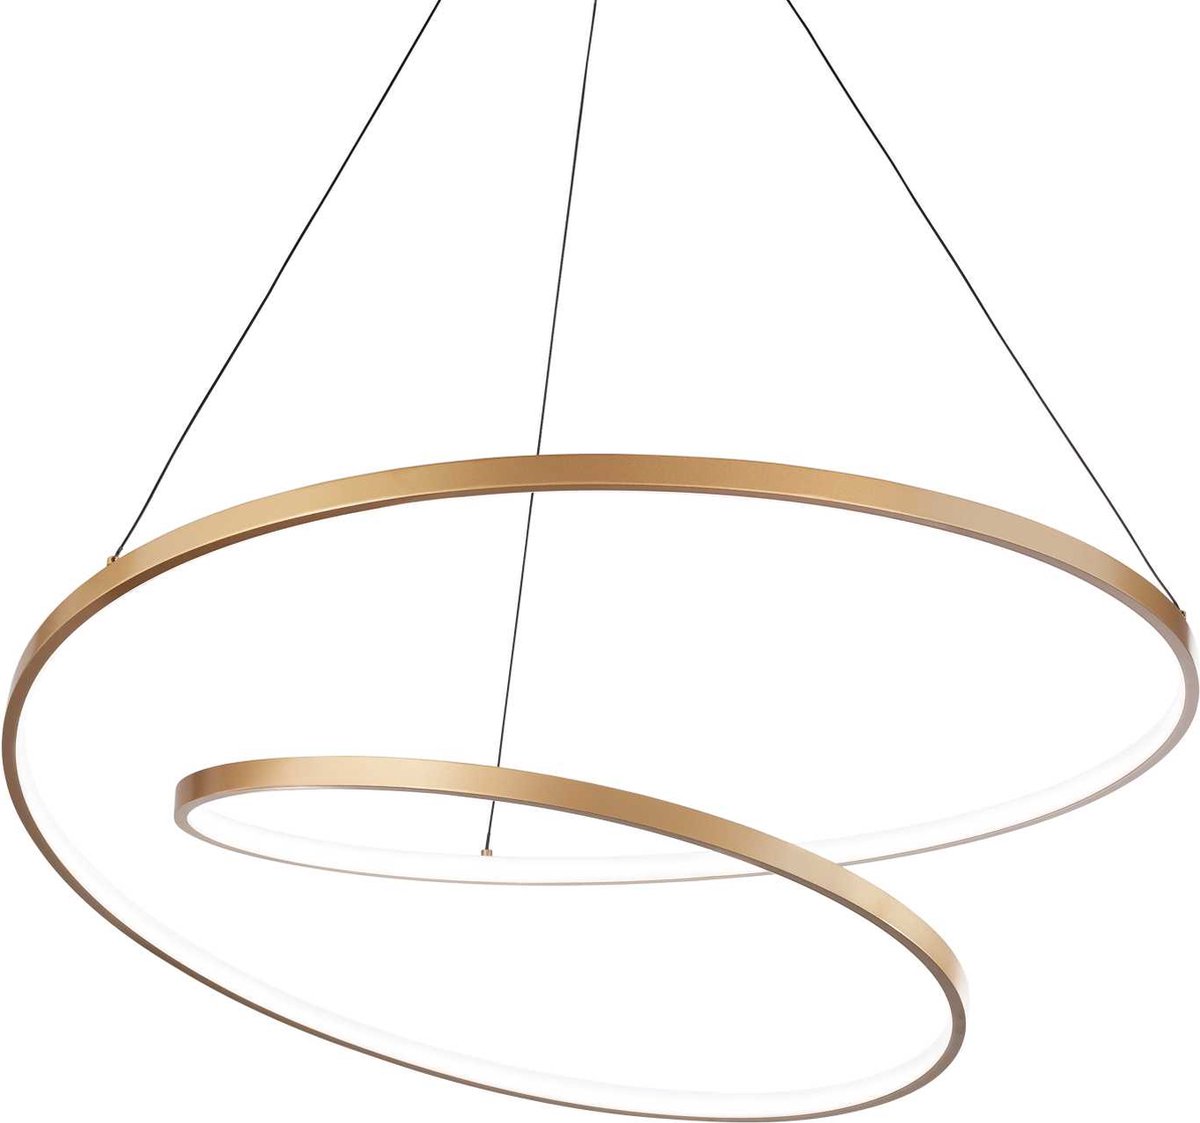 Ideal Your Lux - Hanglamp Modern - Metaal - LED - Voor Binnen - Lamp - Lampen - Woonkamer - Eetkamer - Slaapkamer - Messing